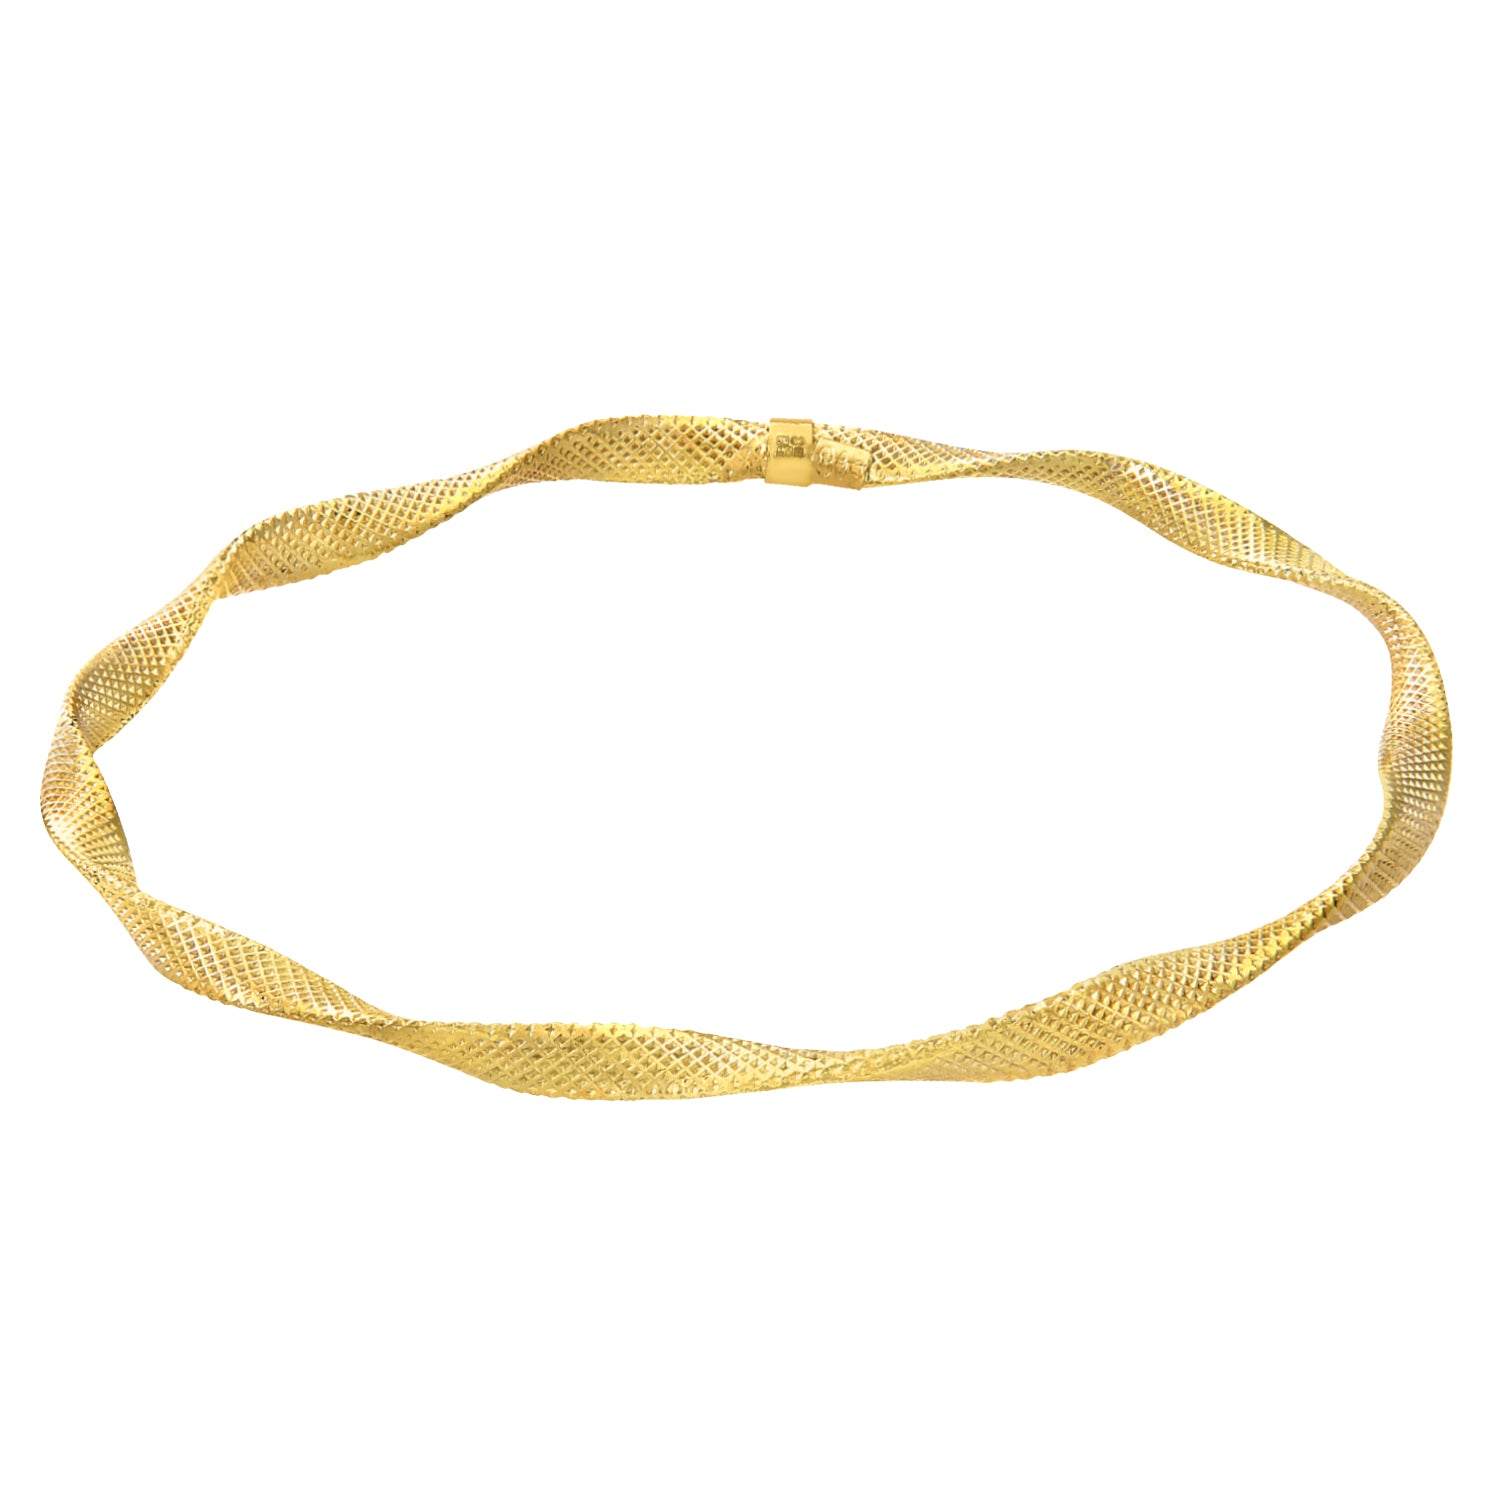 9ct Gold  Flat Wavy Ribbon Bangle Bracelet 4mm 7.75 inch - BNGAXL1500Y